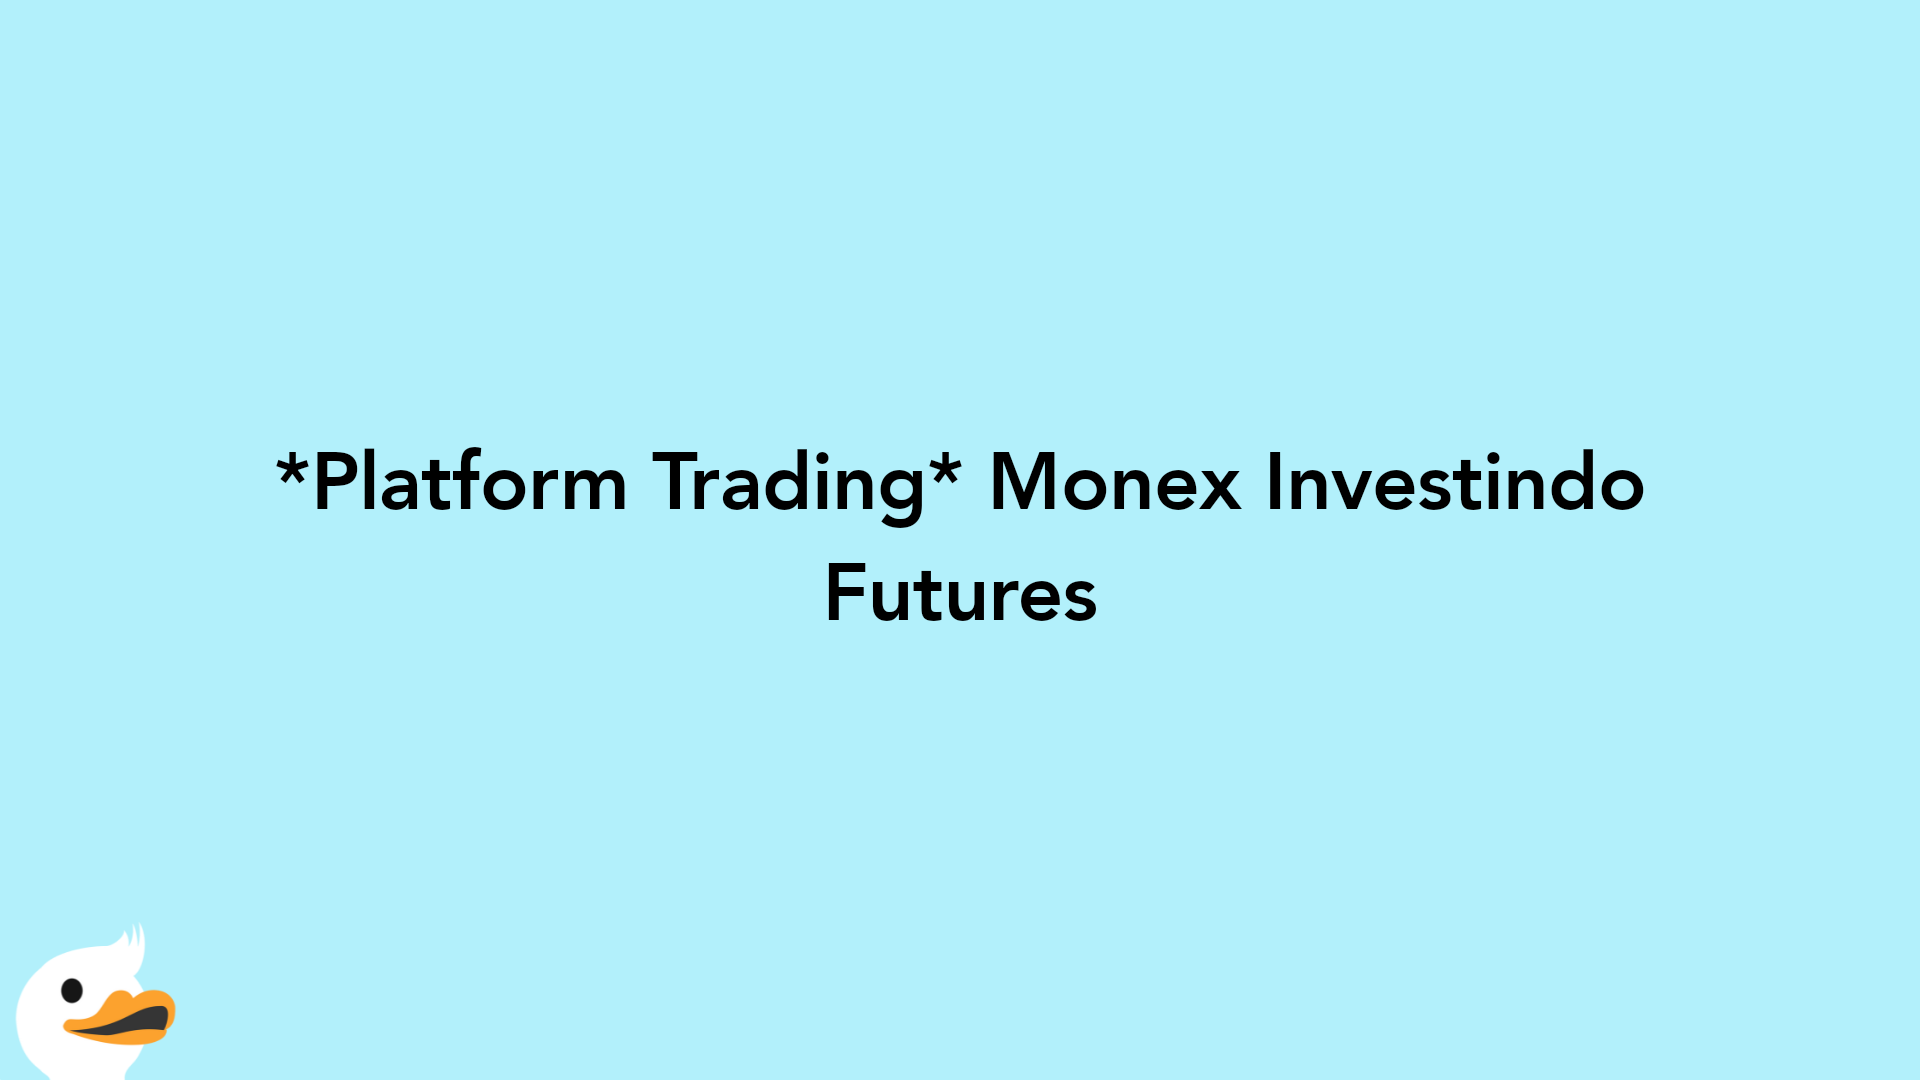 Platform Trading Monex Investindo Futures